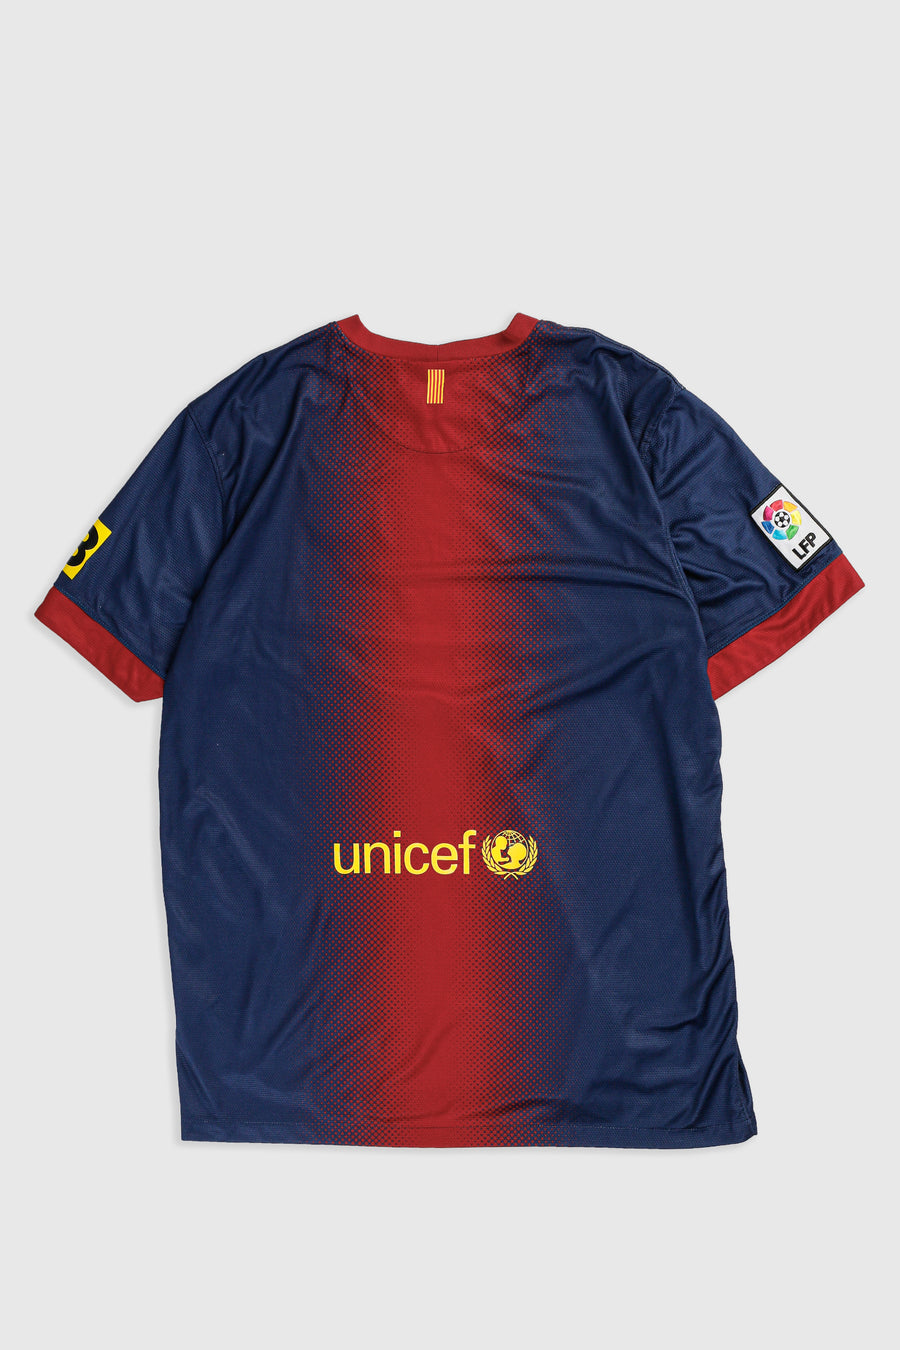 Vintage Barcelona Soccer Jersey - XL